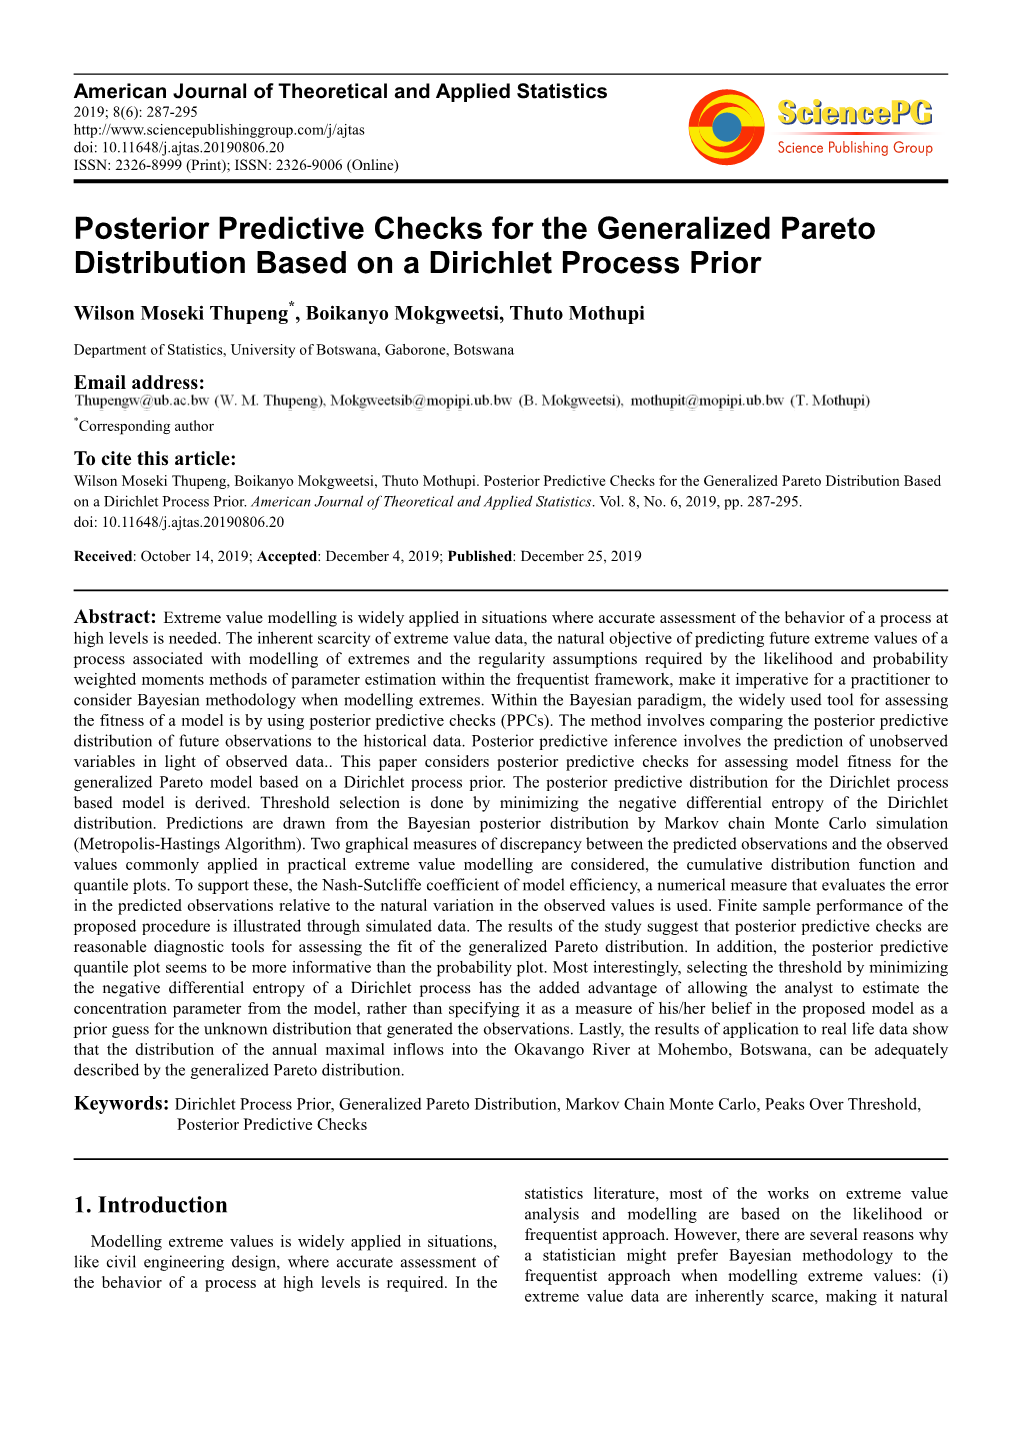 Posterior Predictive Checks for the Generalized Pareto Distribution Based on a Dirichlet Process Prior